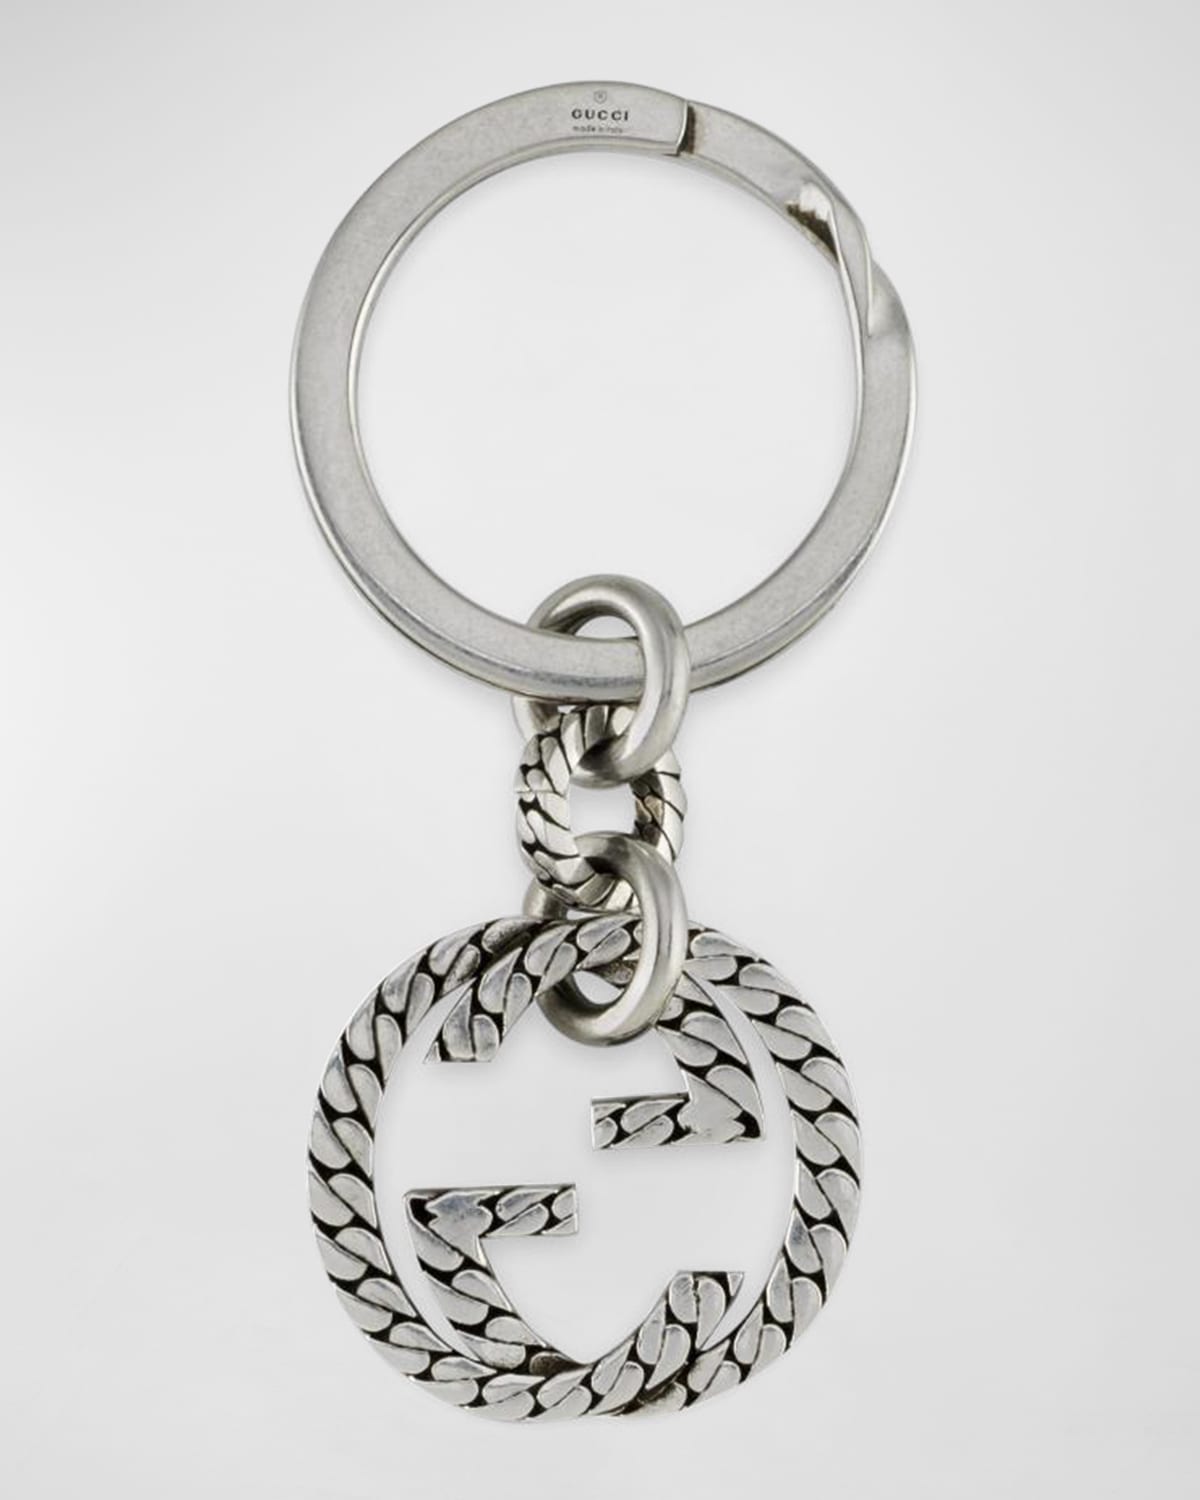 Cake Keyring Keychain Metal Key Ring For Women's Bag Wallet Handbags G